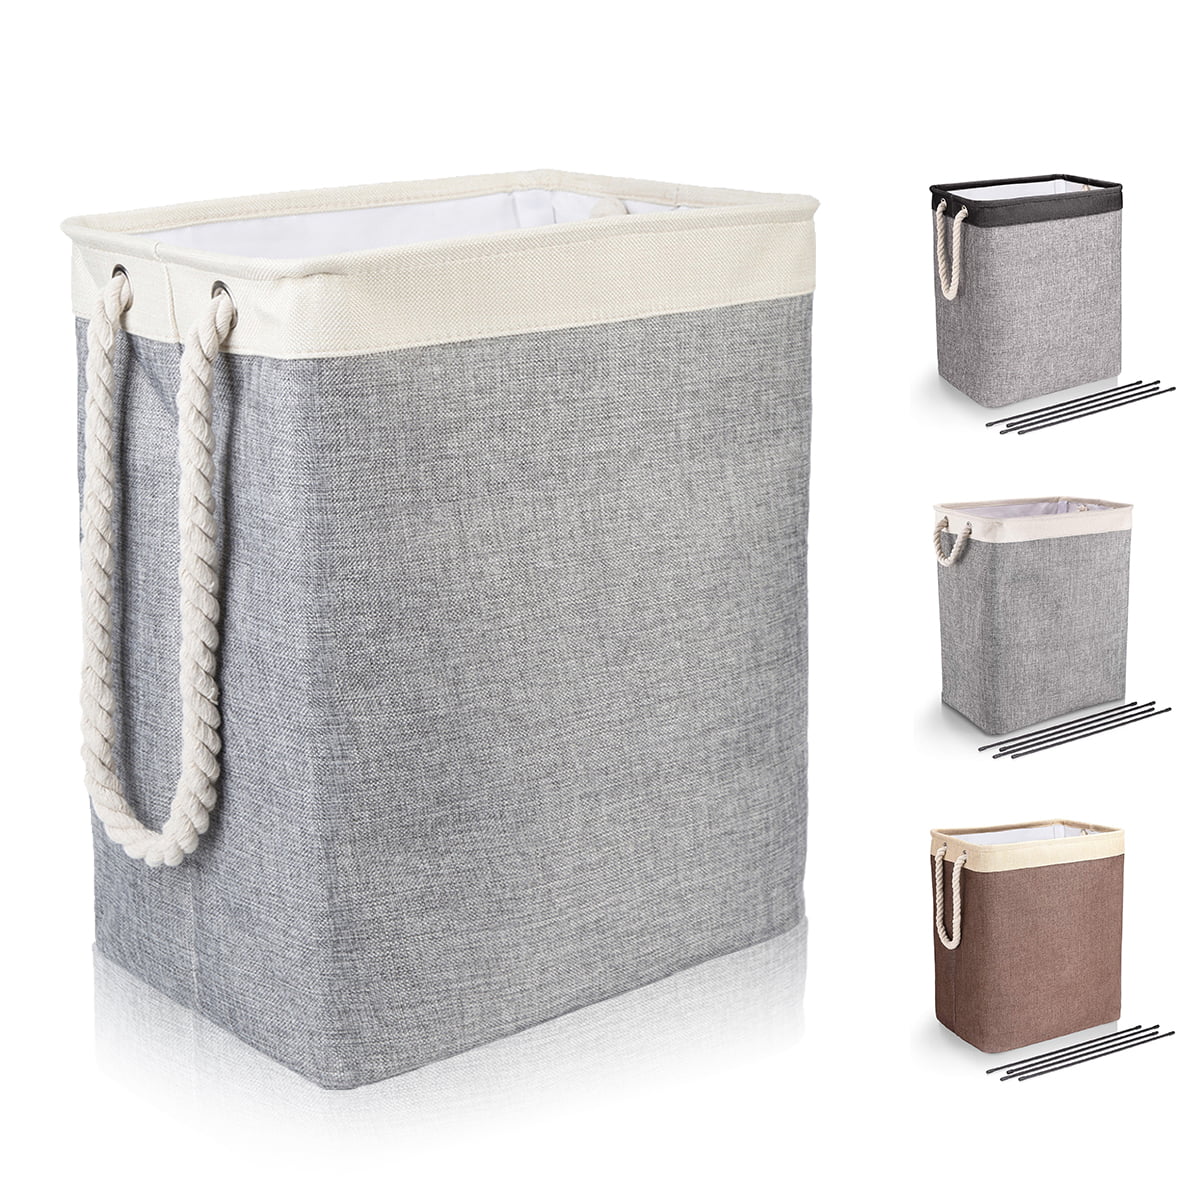 Lado Large Black Folding Collapsible Laundry Basket Bag Bin Storage Hamper with Aluminium Handles